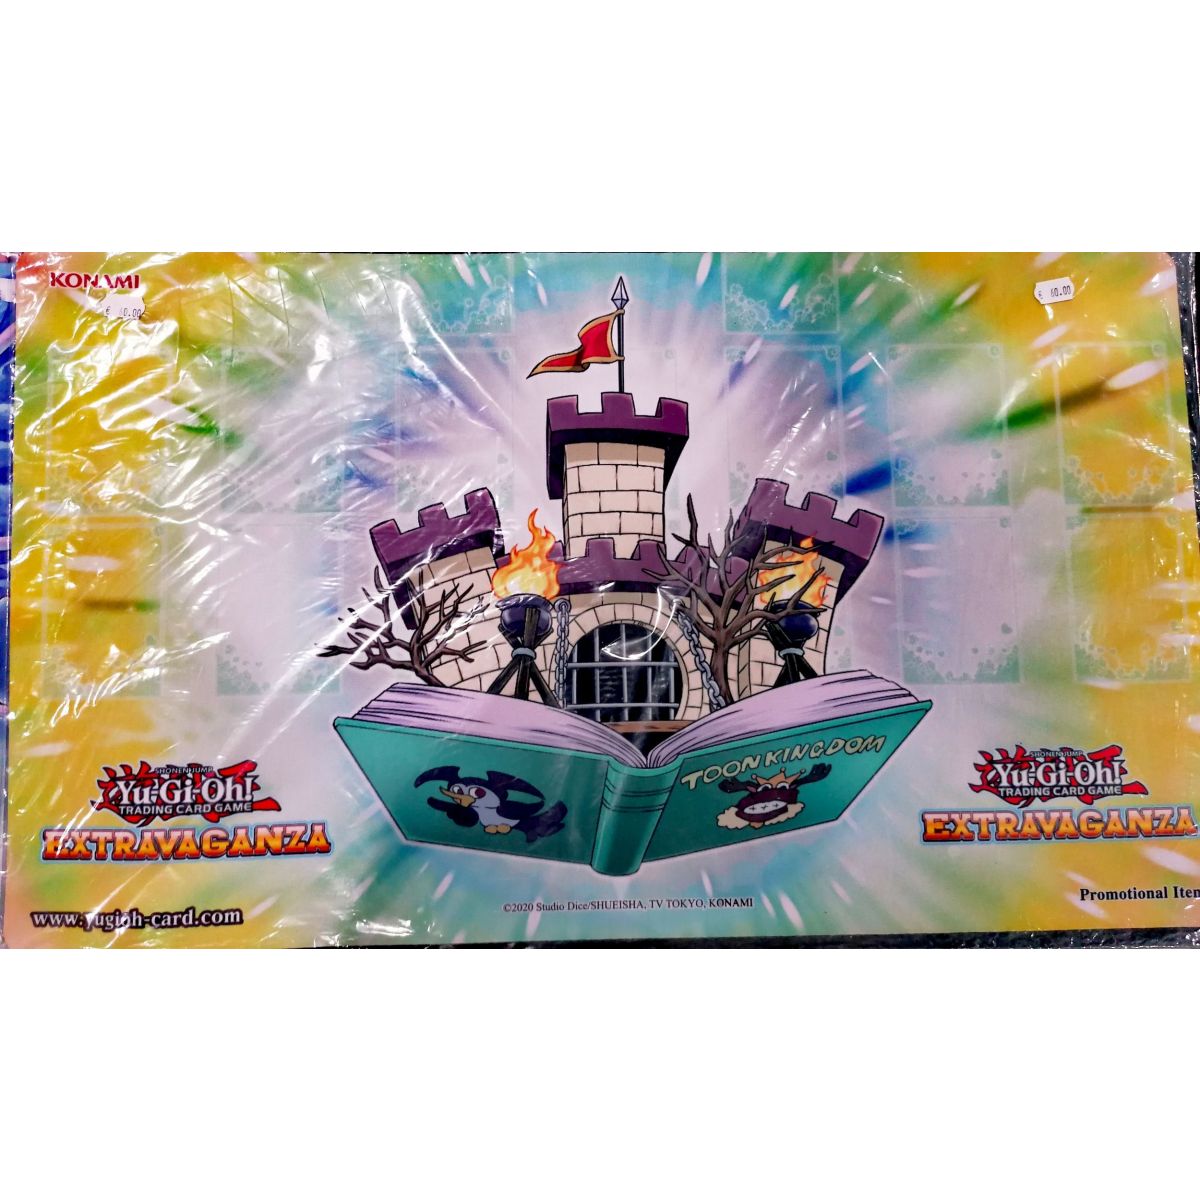 Yu-Gi-Oh! - Playmat - Extravaganza 2020 "Toon Kingdom"